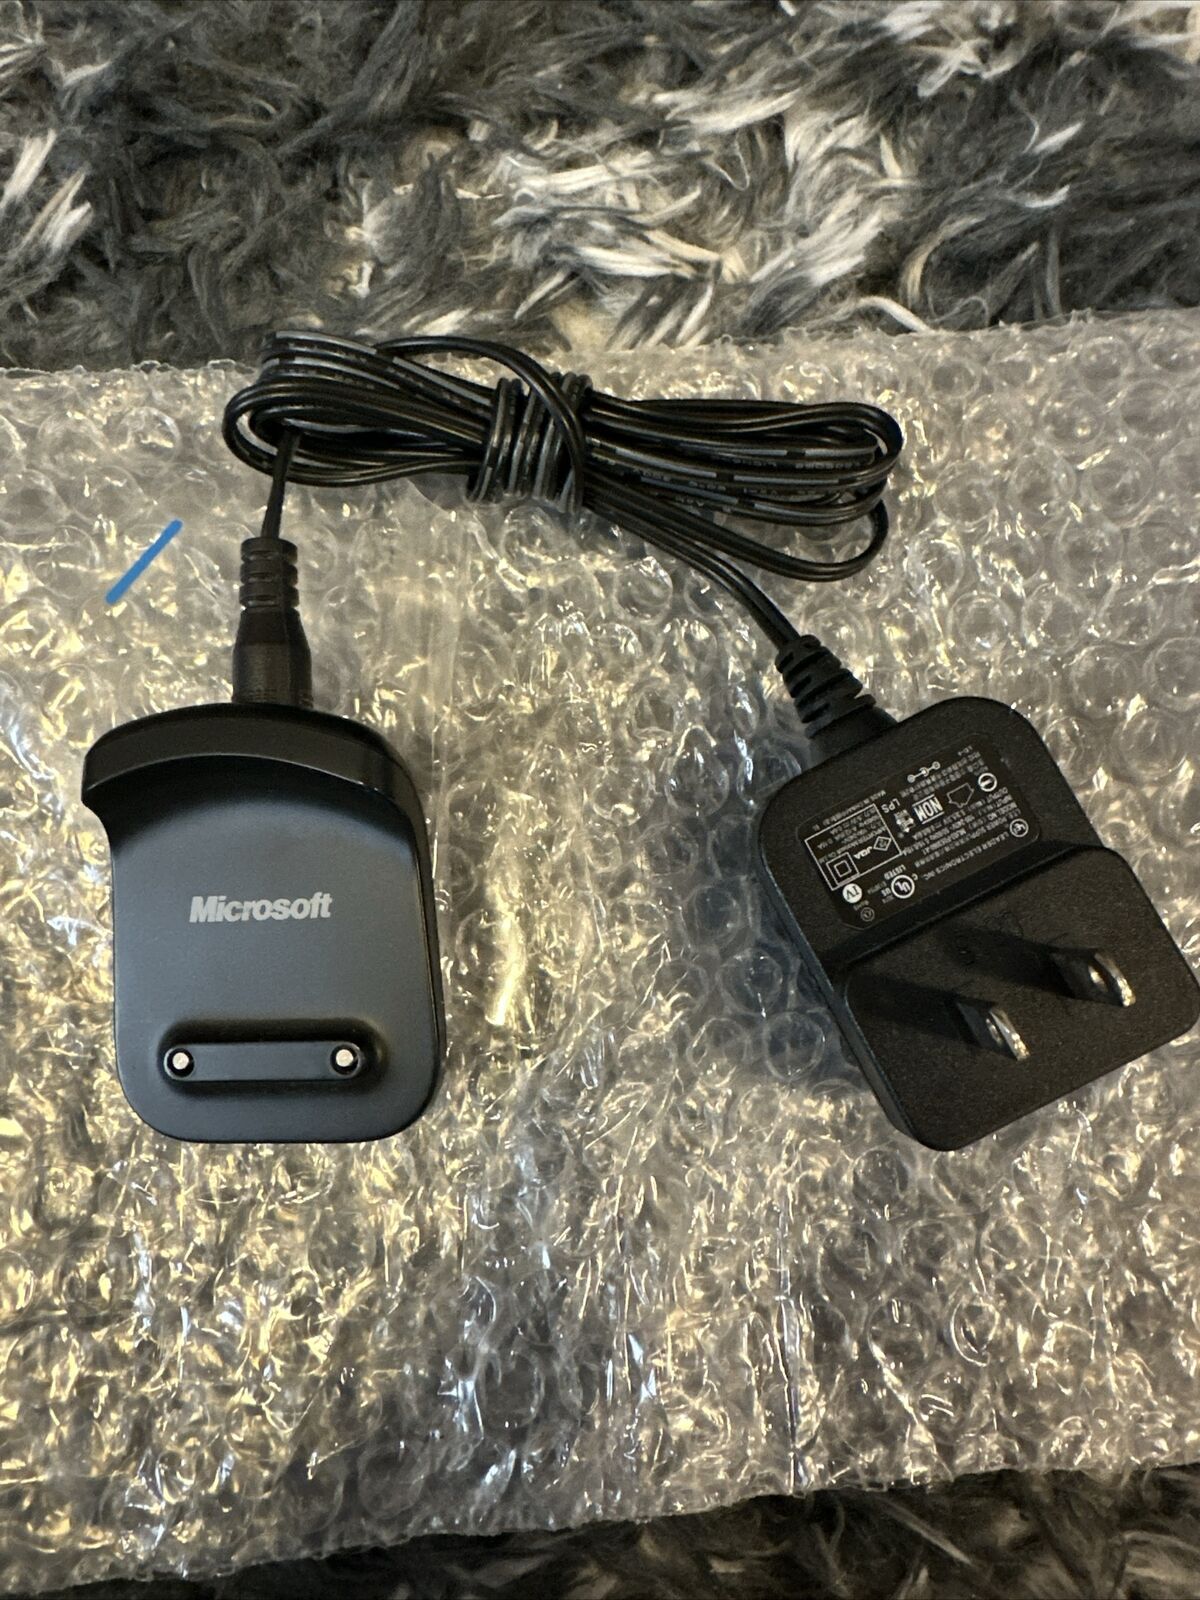 Microsoft 1365 V3.0 Black 5.3V 600mA Wireless Mouse Charger